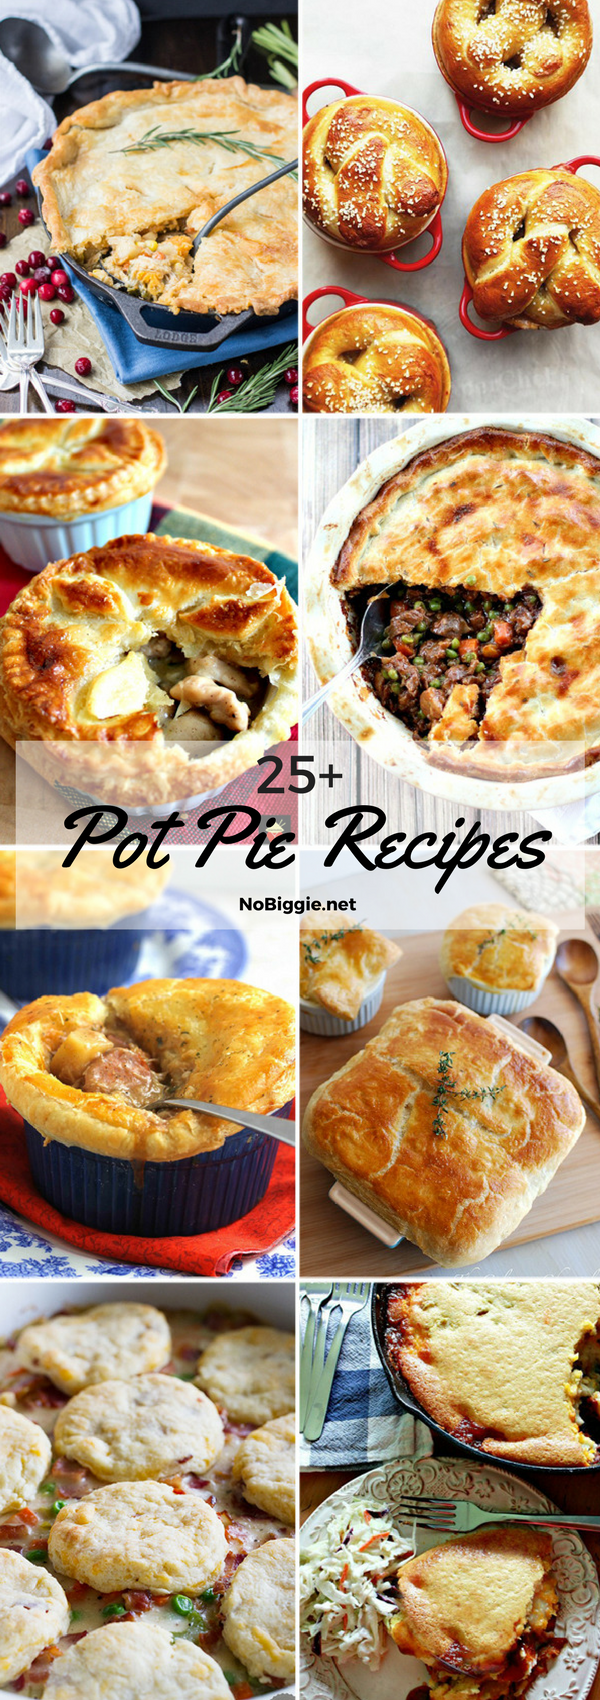 25+ Pot Pie Recipes |NoBiggie.net